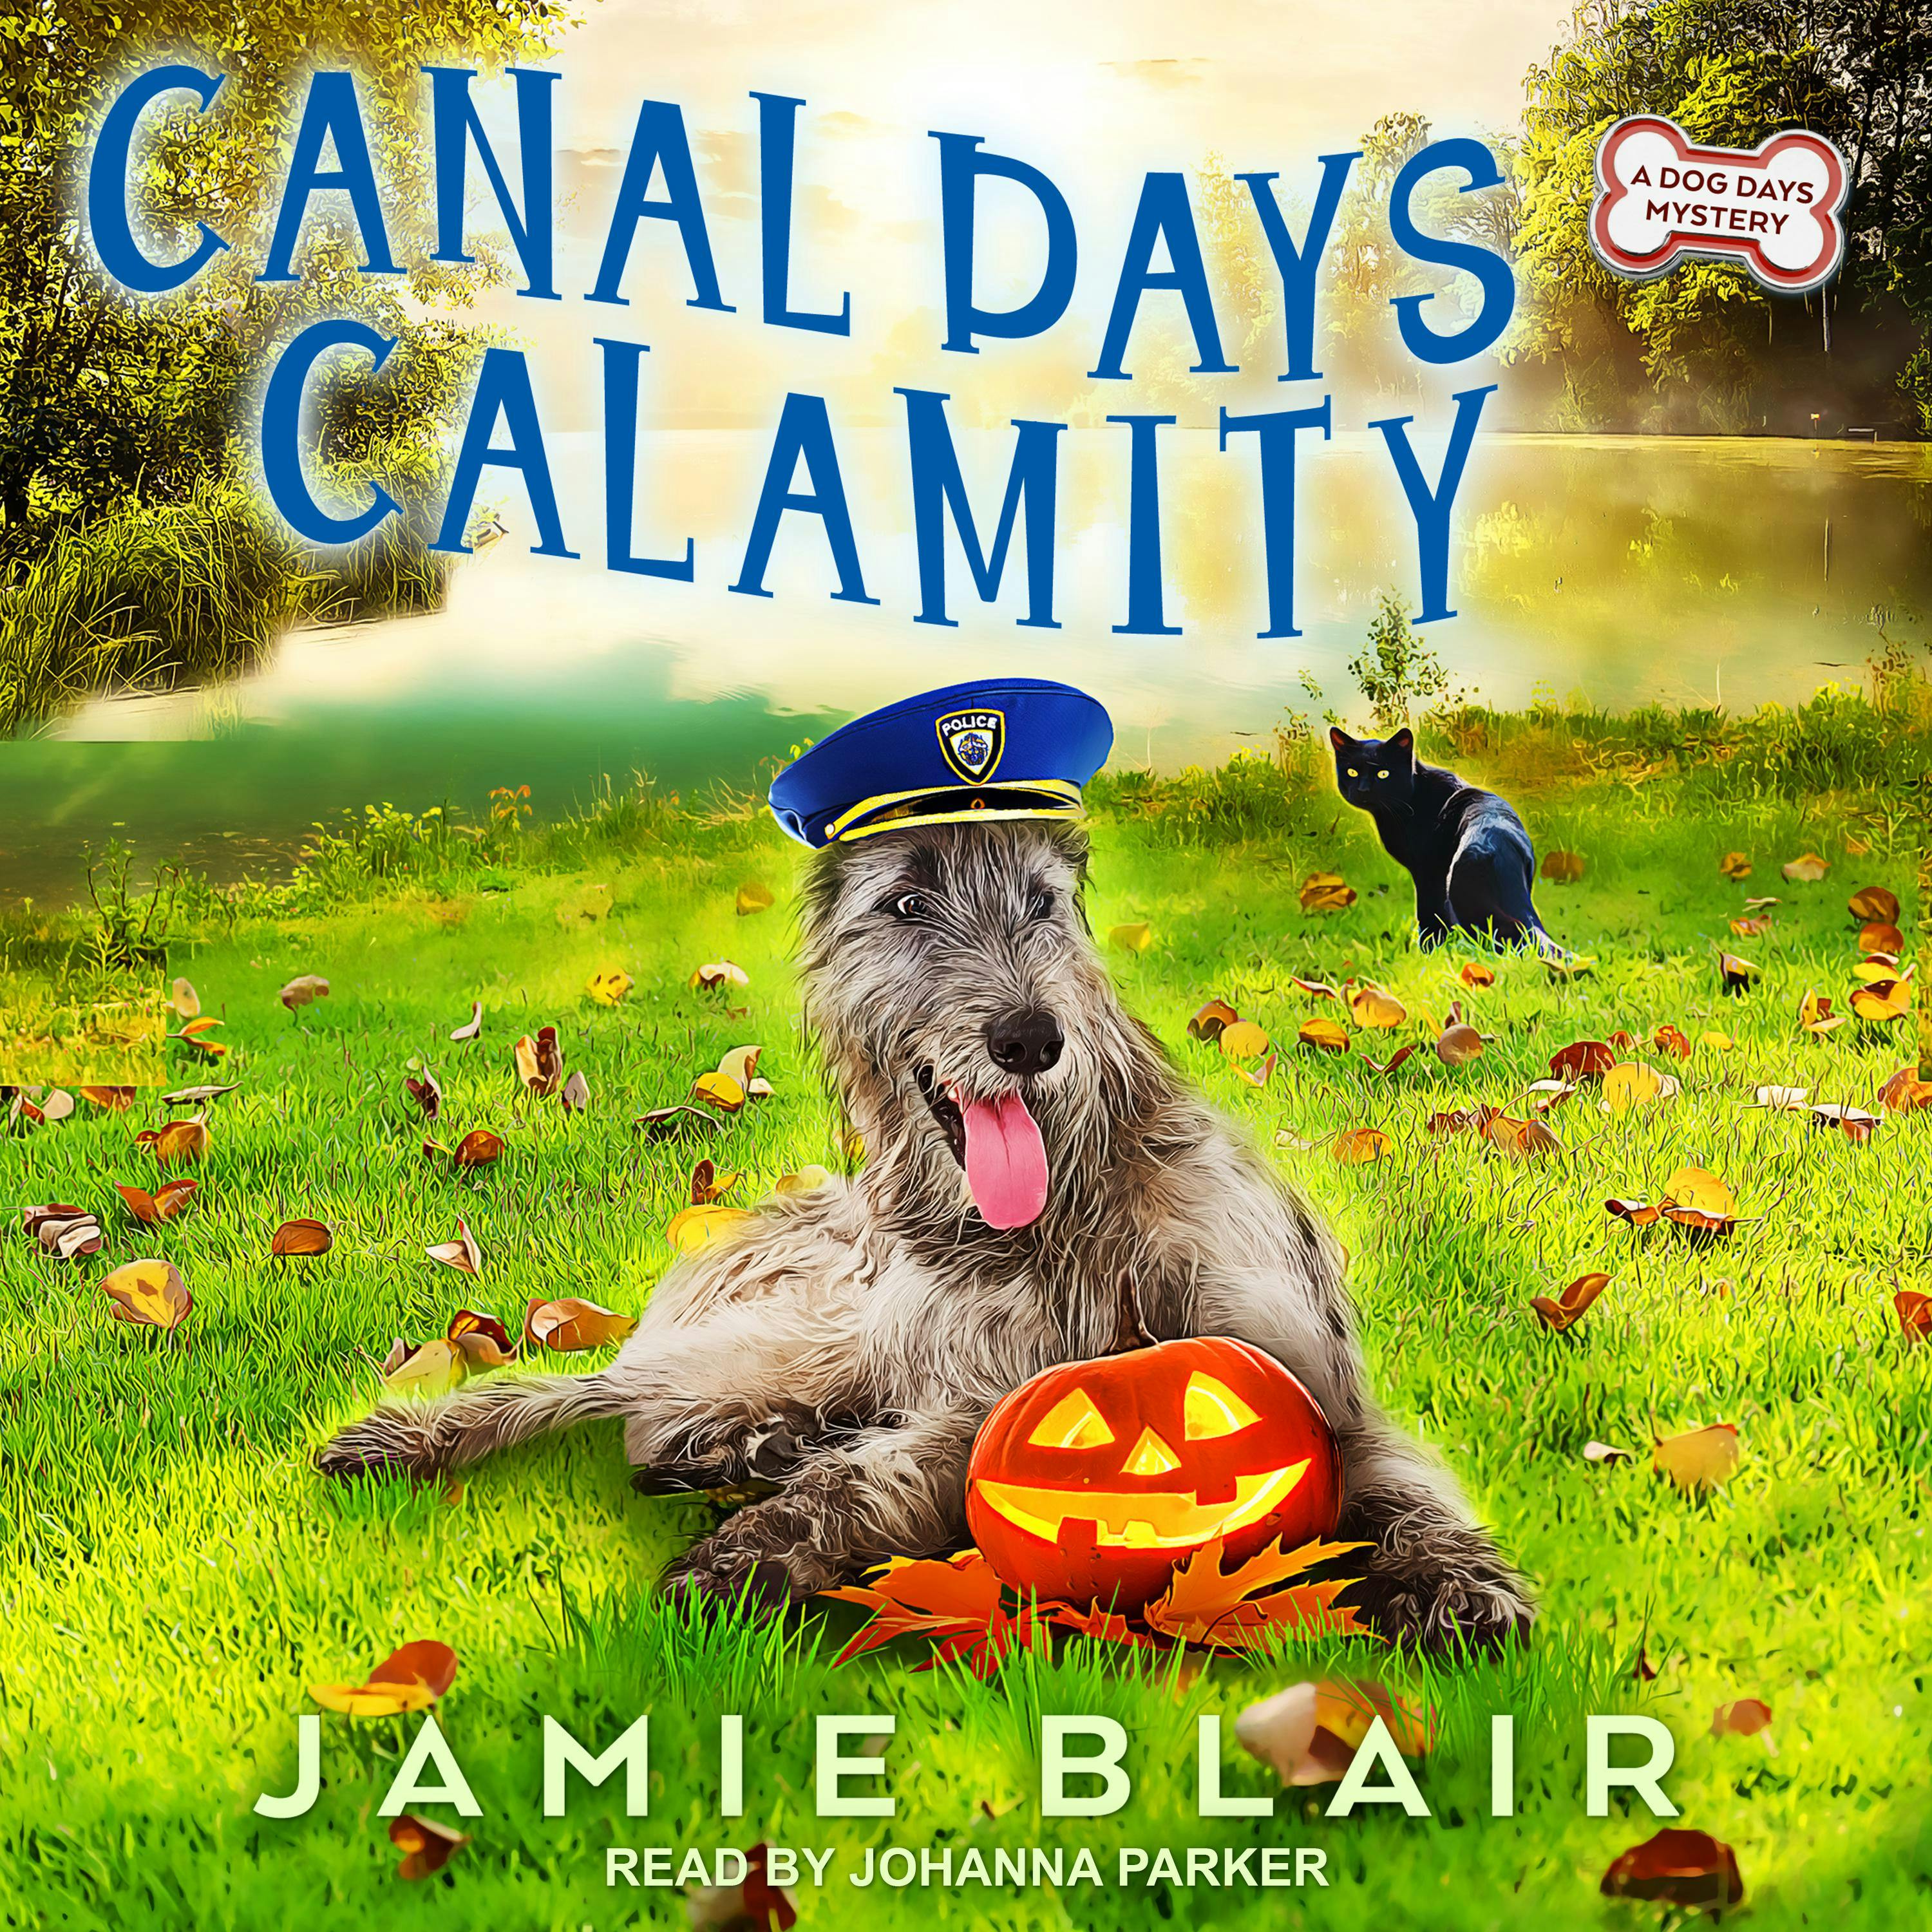 Canal Days Calamity: A Dog Days Mystery - Jamie Blair